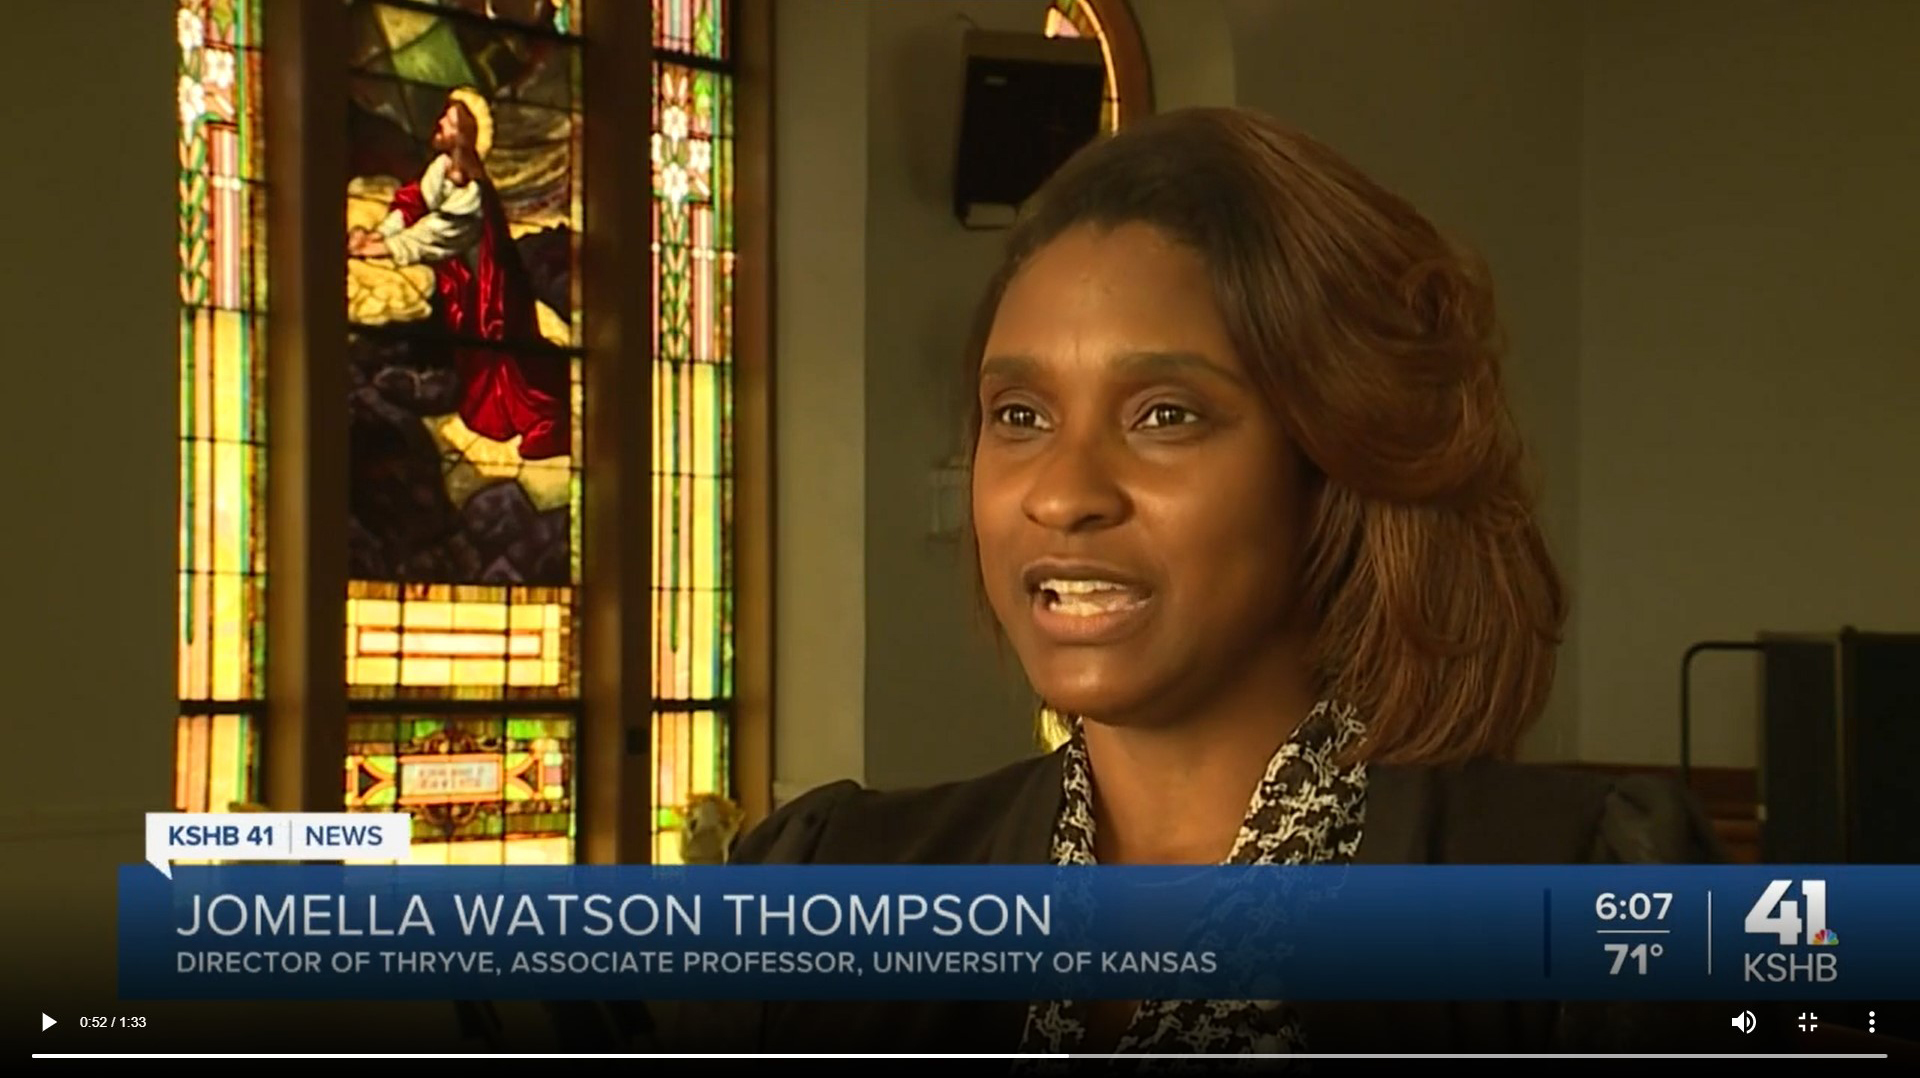 Jomella Watson-Thompson being interviewed on the KSHB News program.